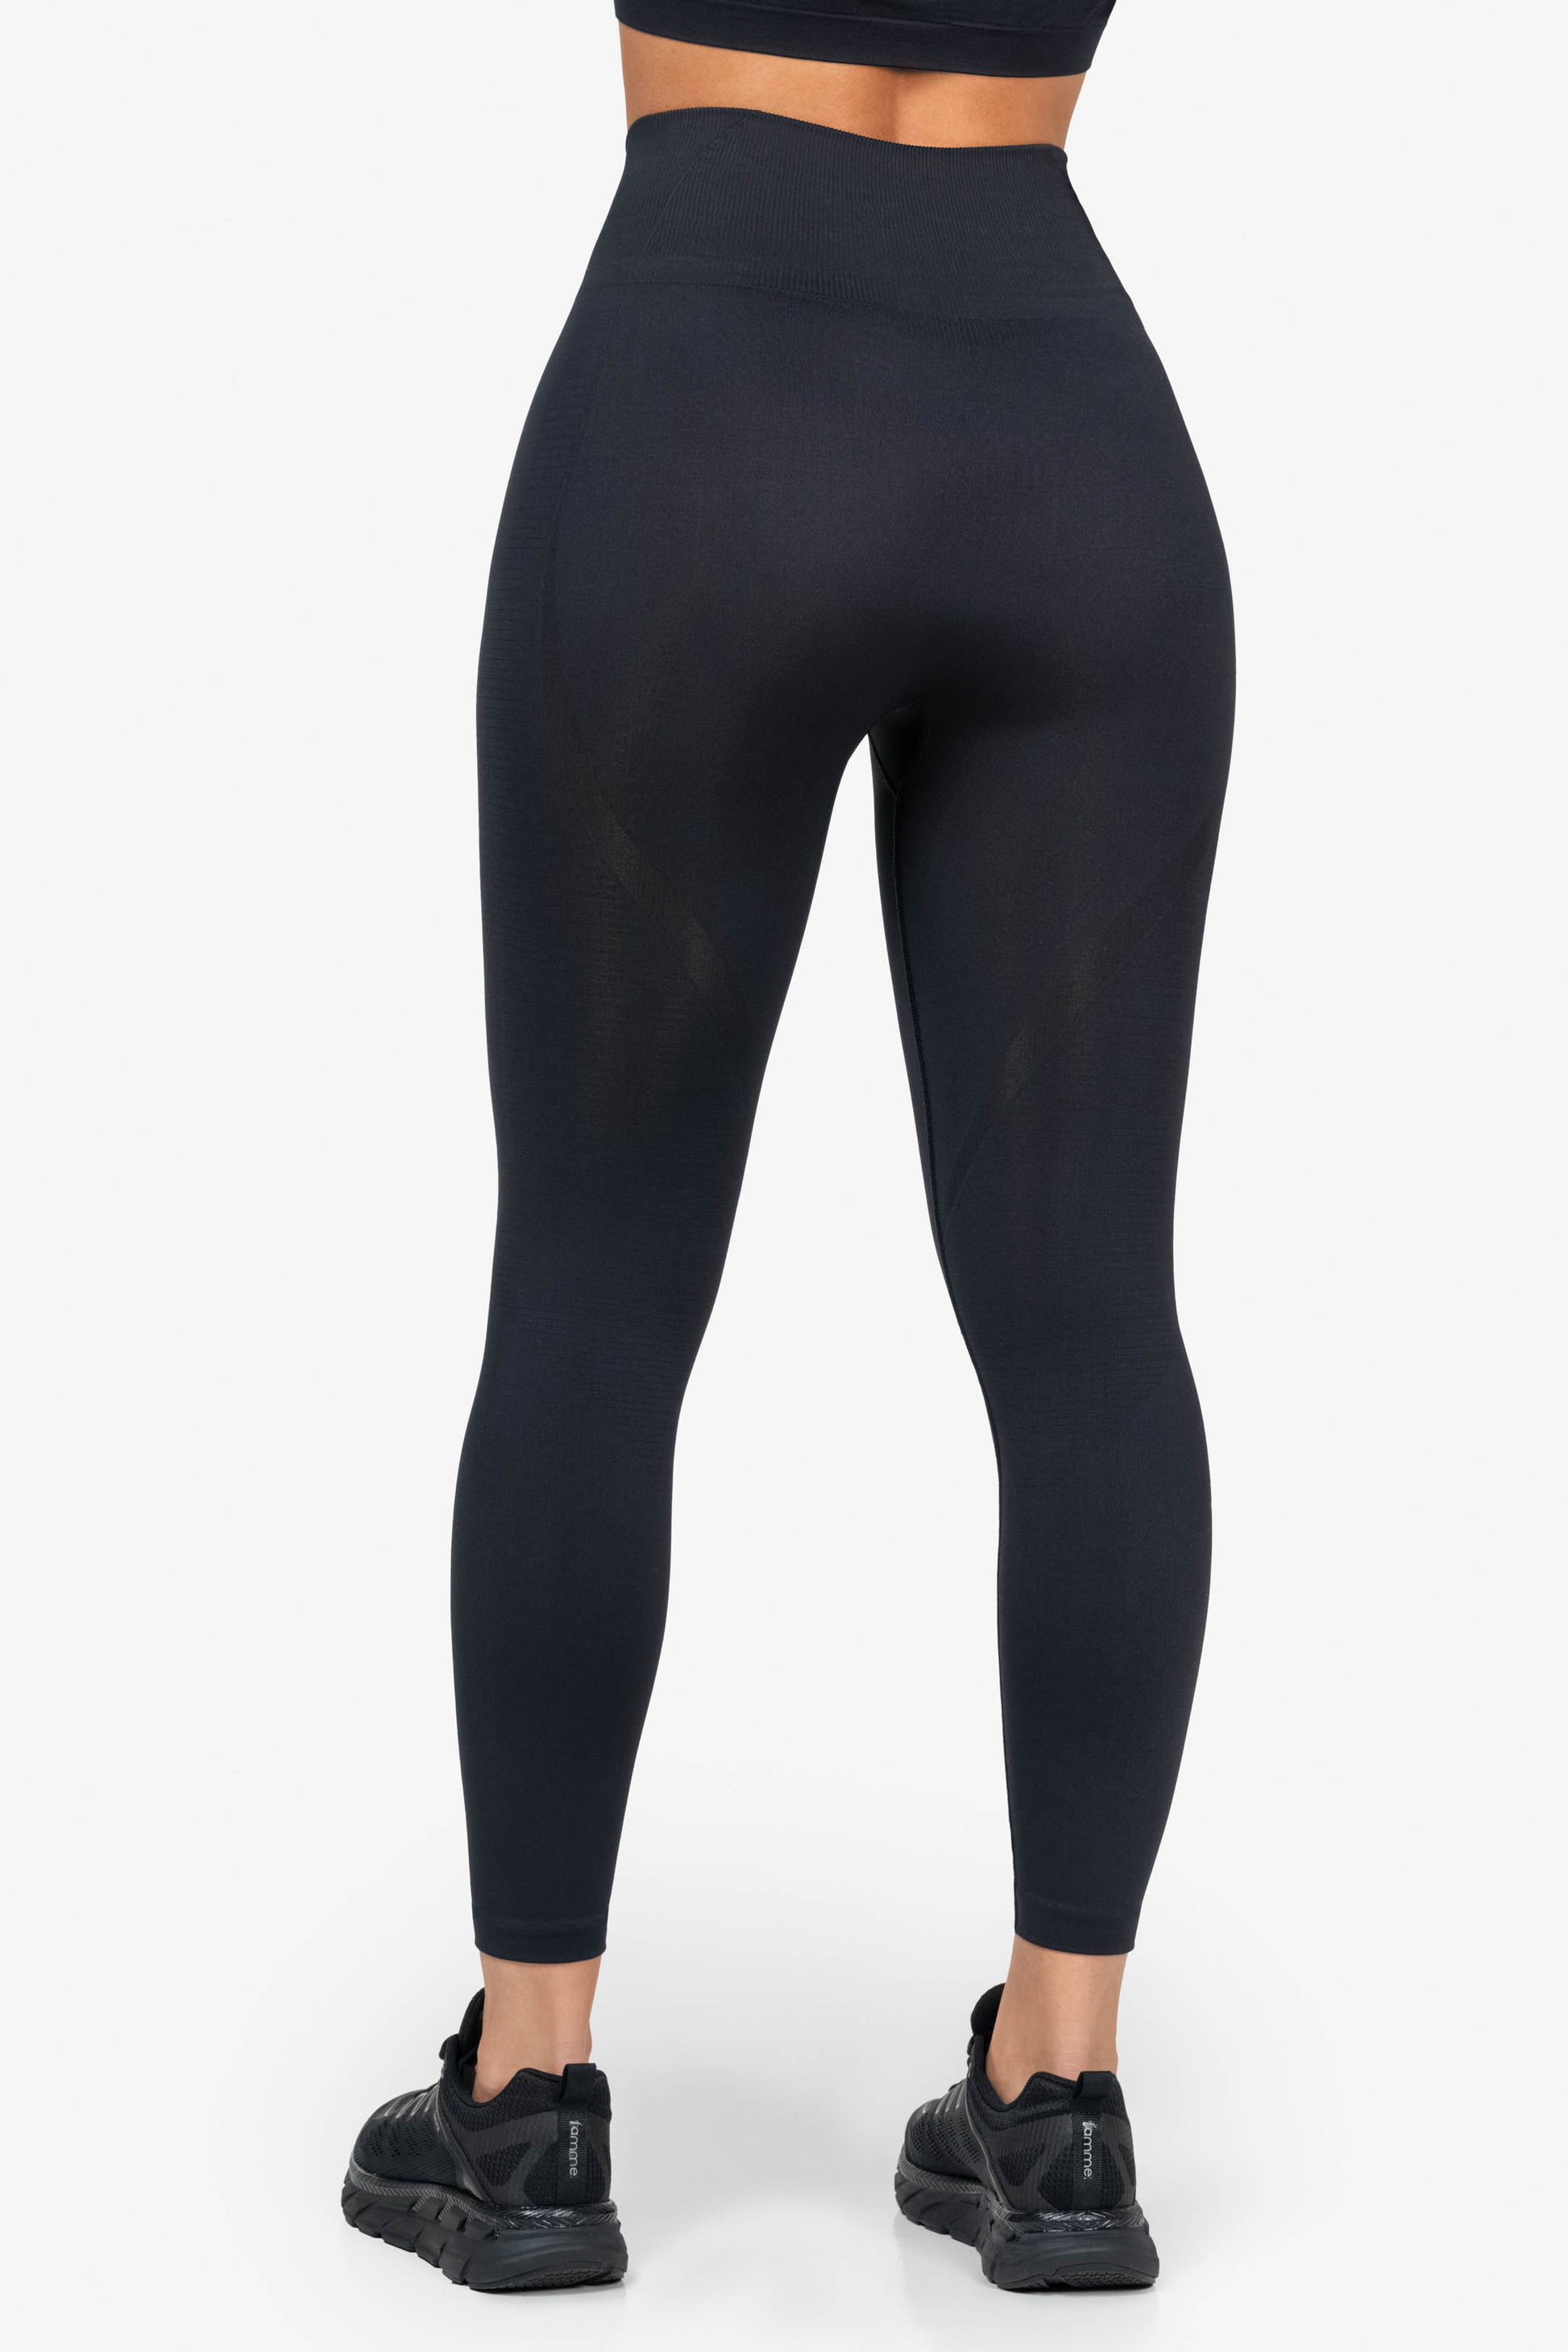 Seamless tights - High waist - Squat proof - Vortex design – Famme